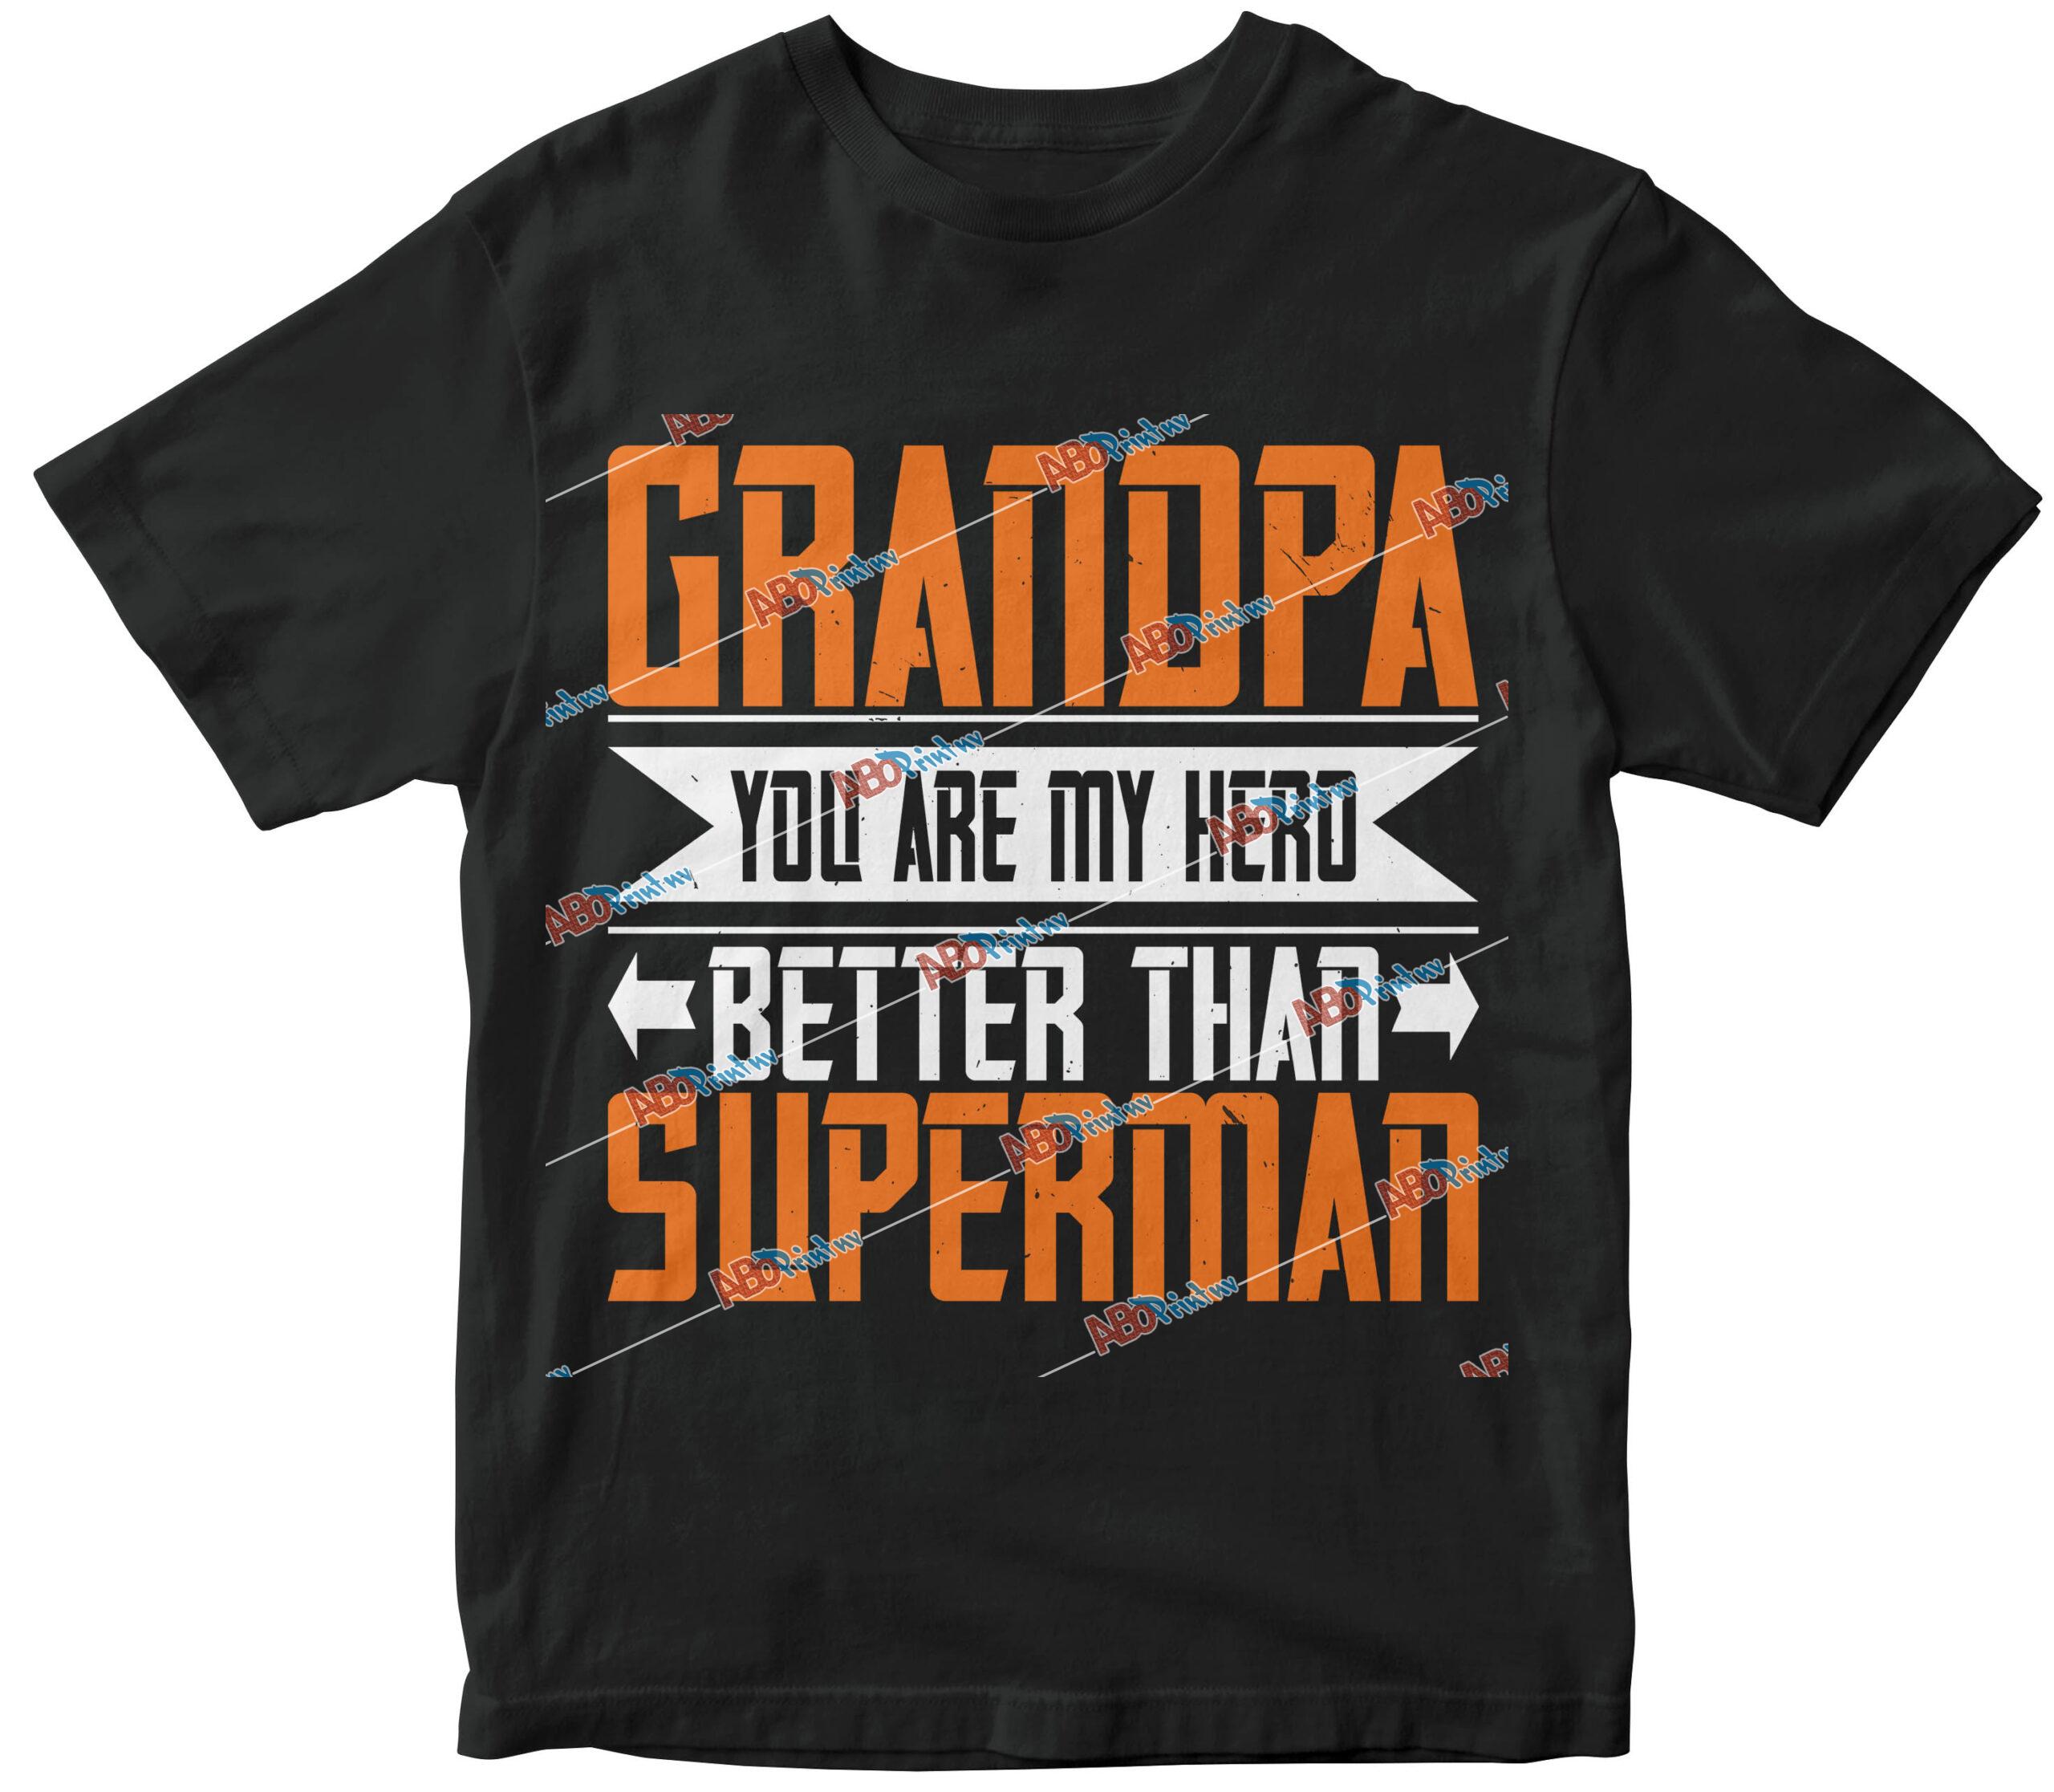 Grandpa, you are my hero better than superman-02.jpg